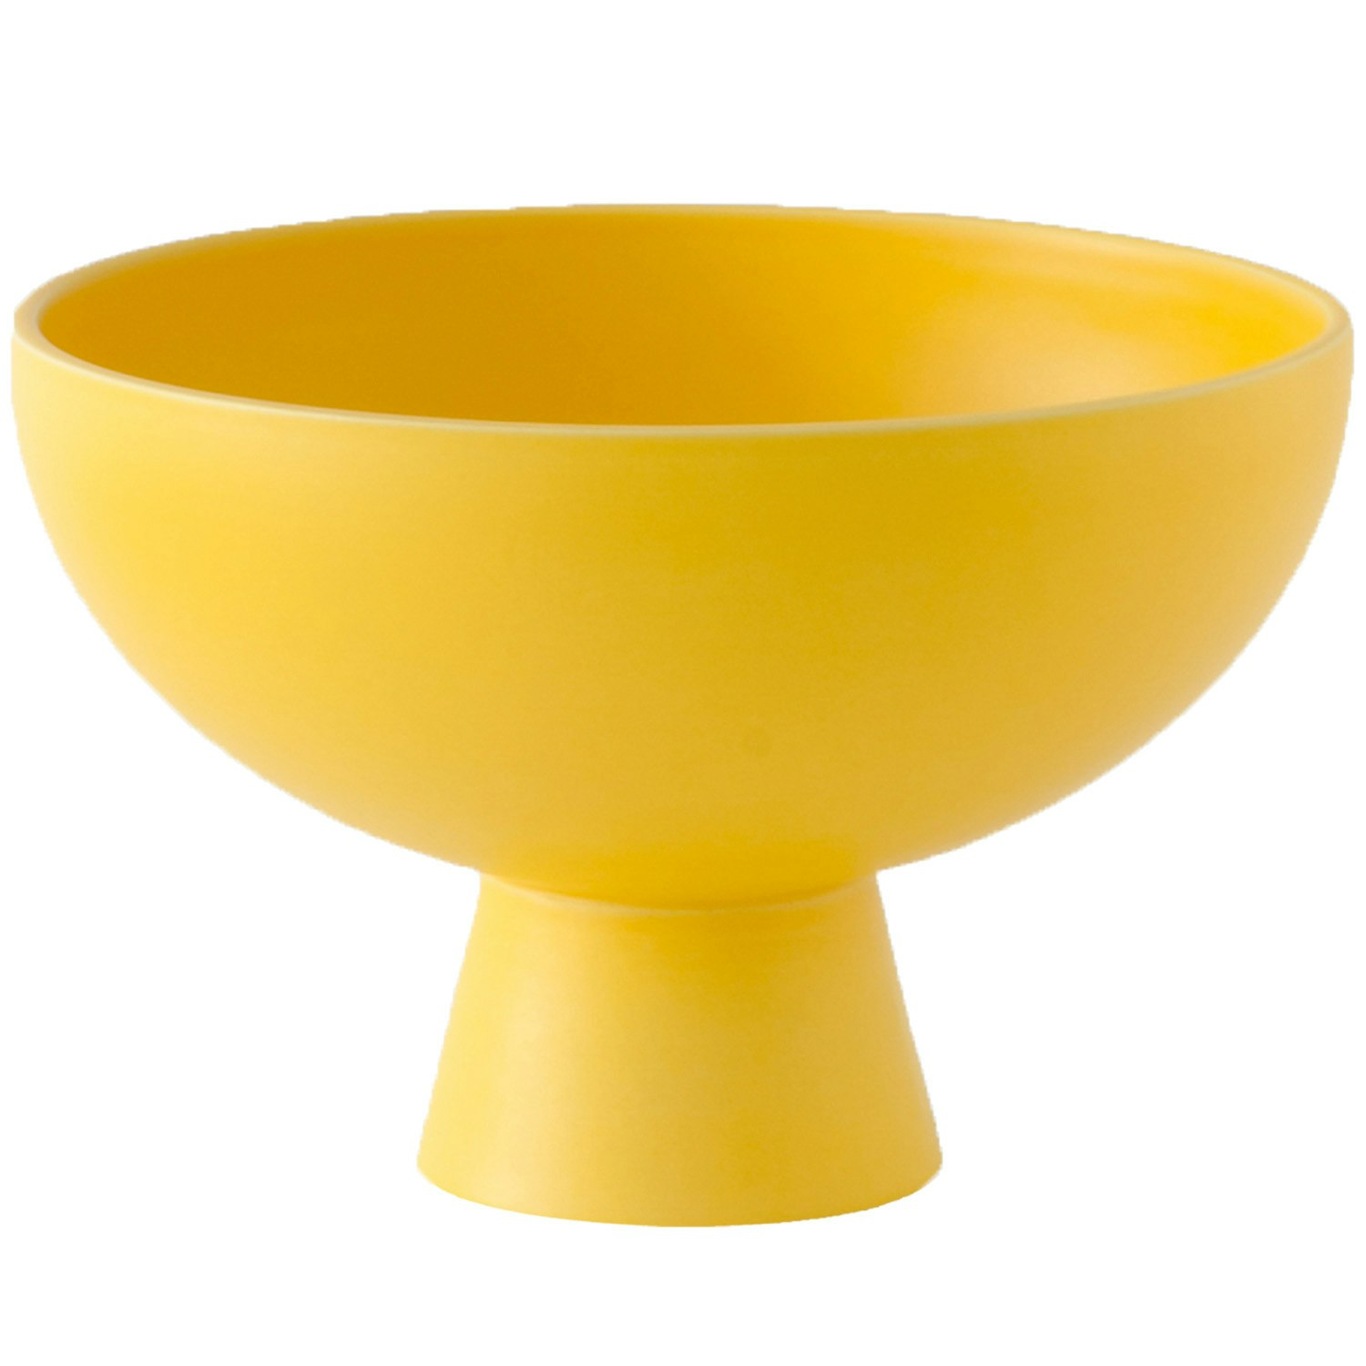 Strøm Bowl With Foot Ø19 cm, Freesia Yellow